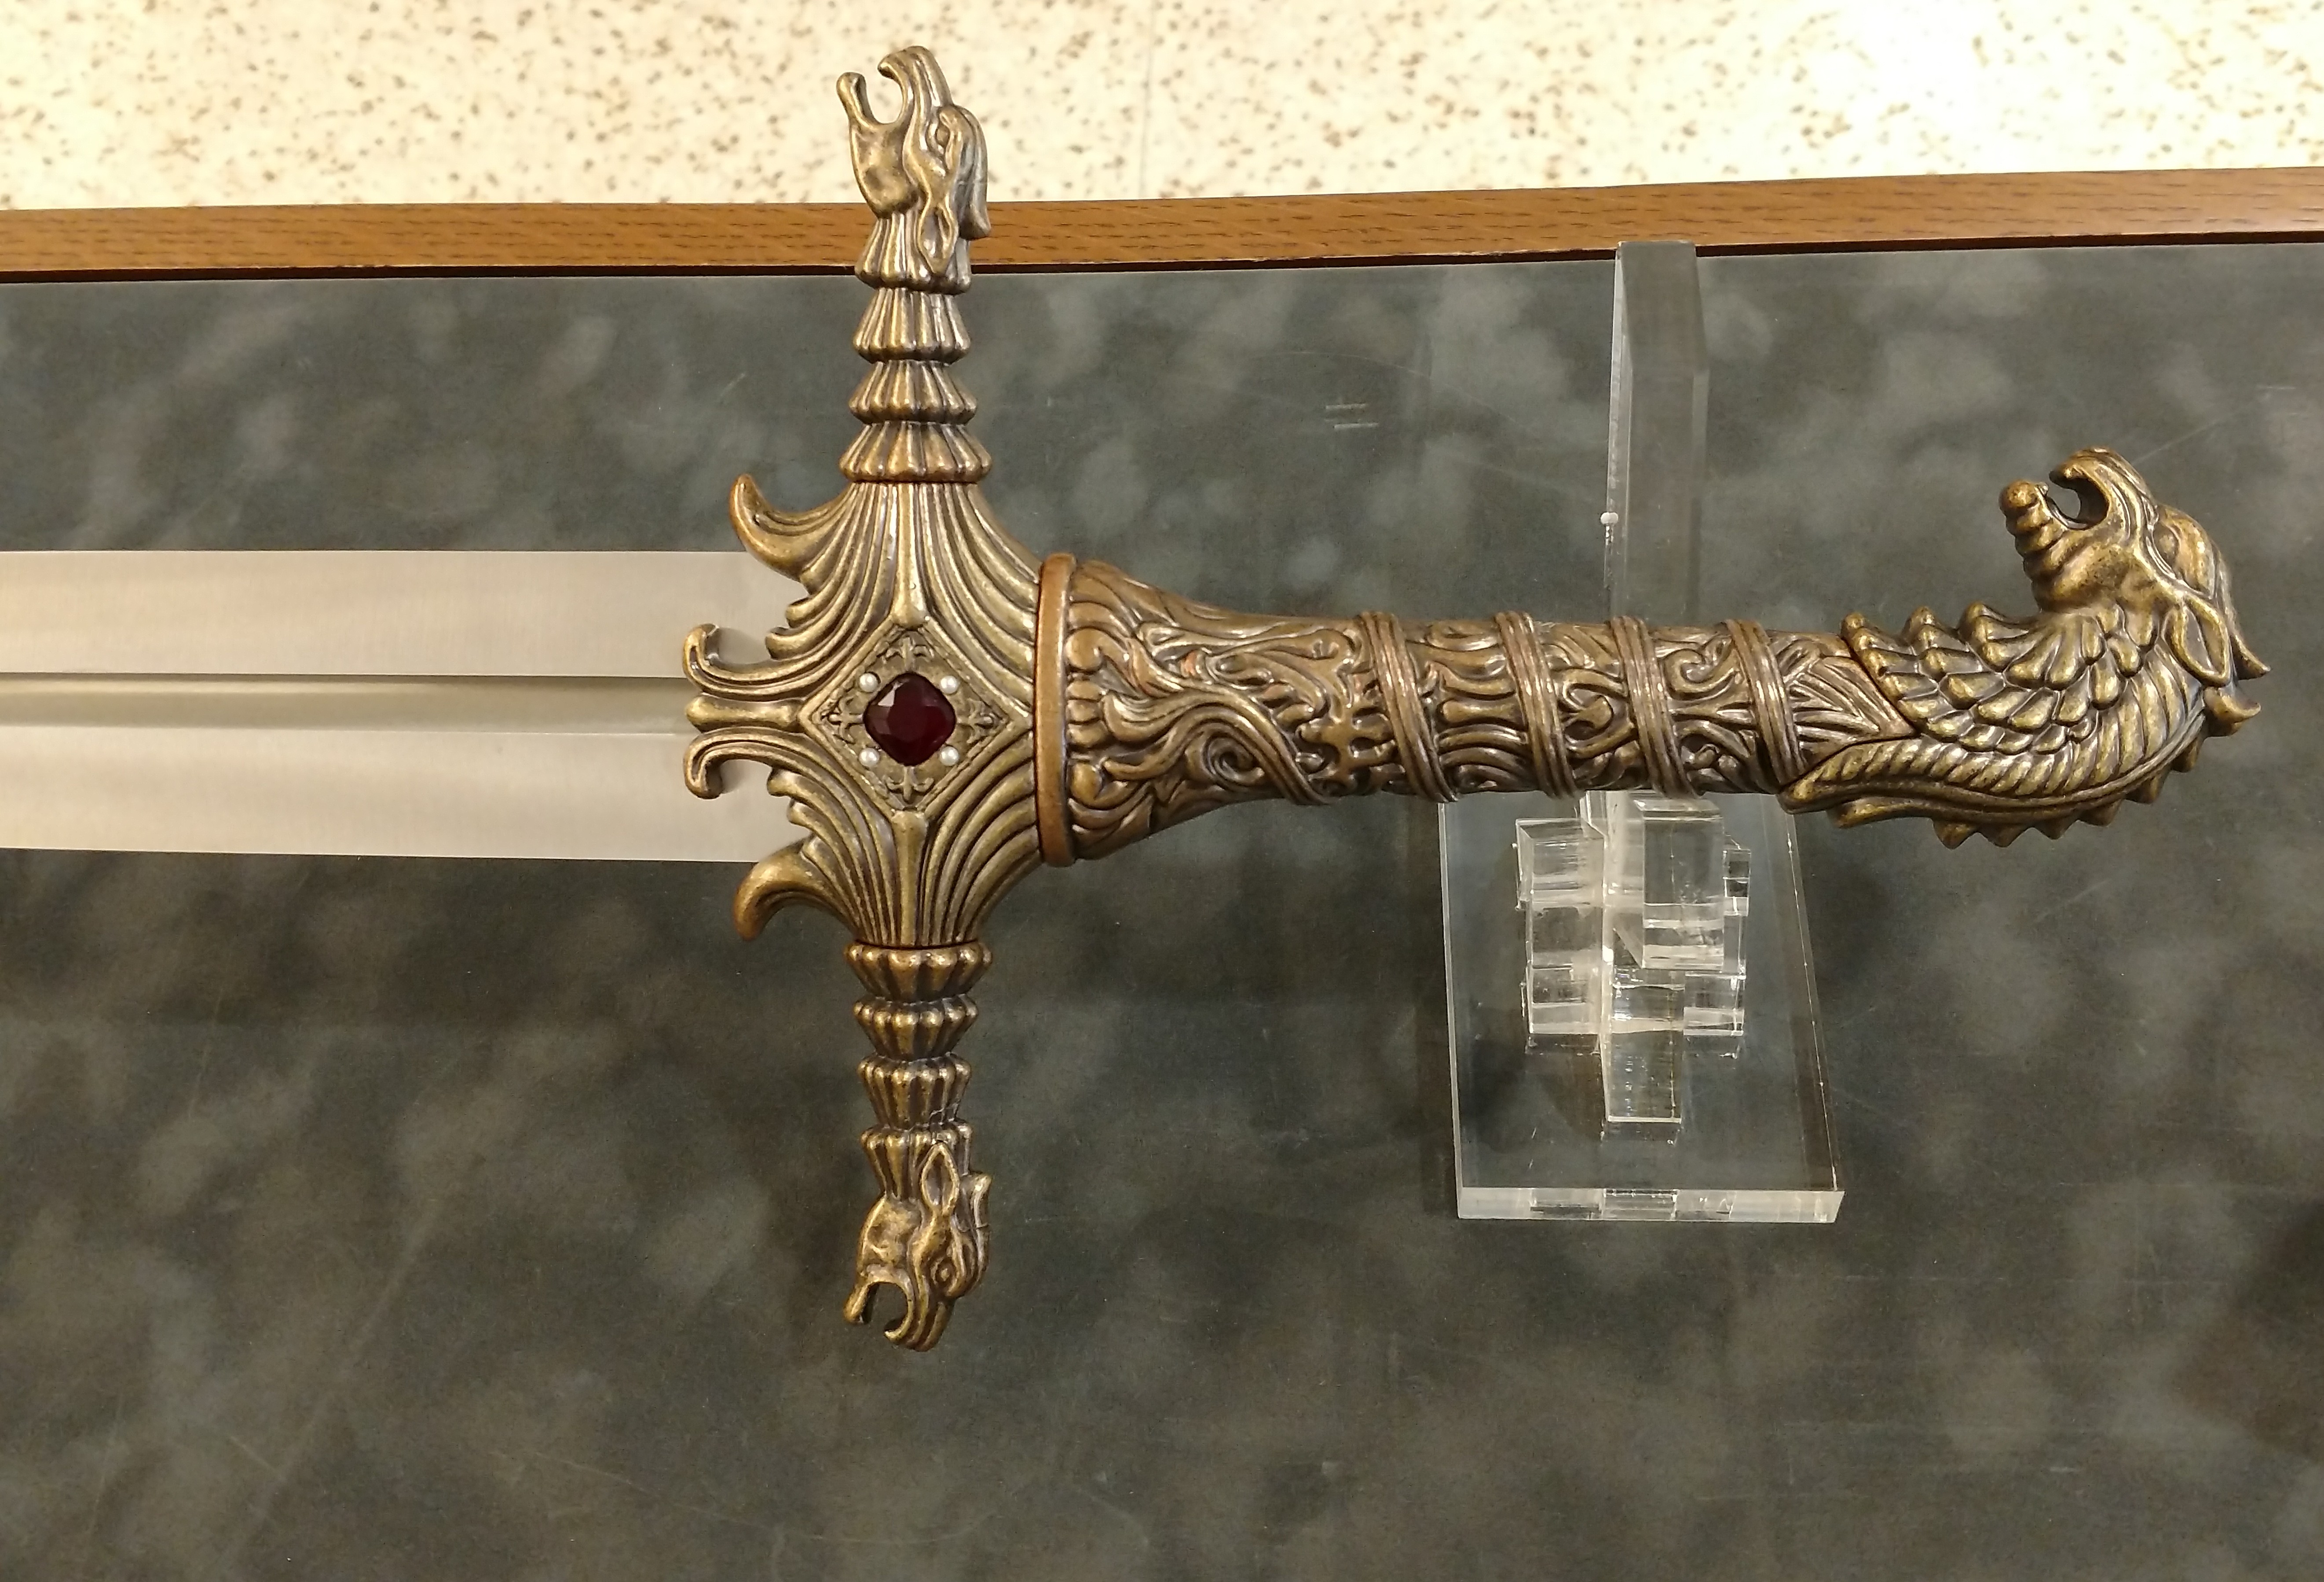 Game of Thrones sword